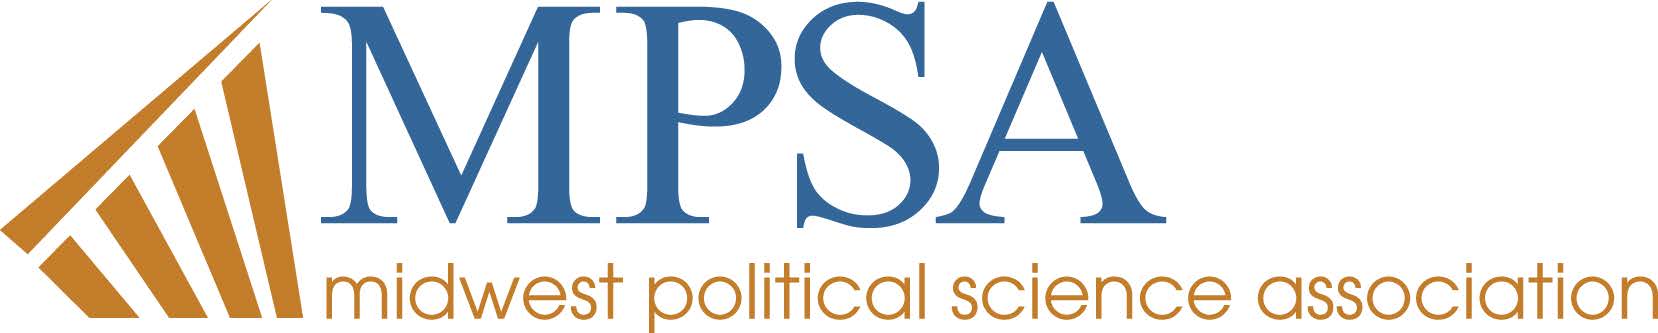 Midwest Political Science Association